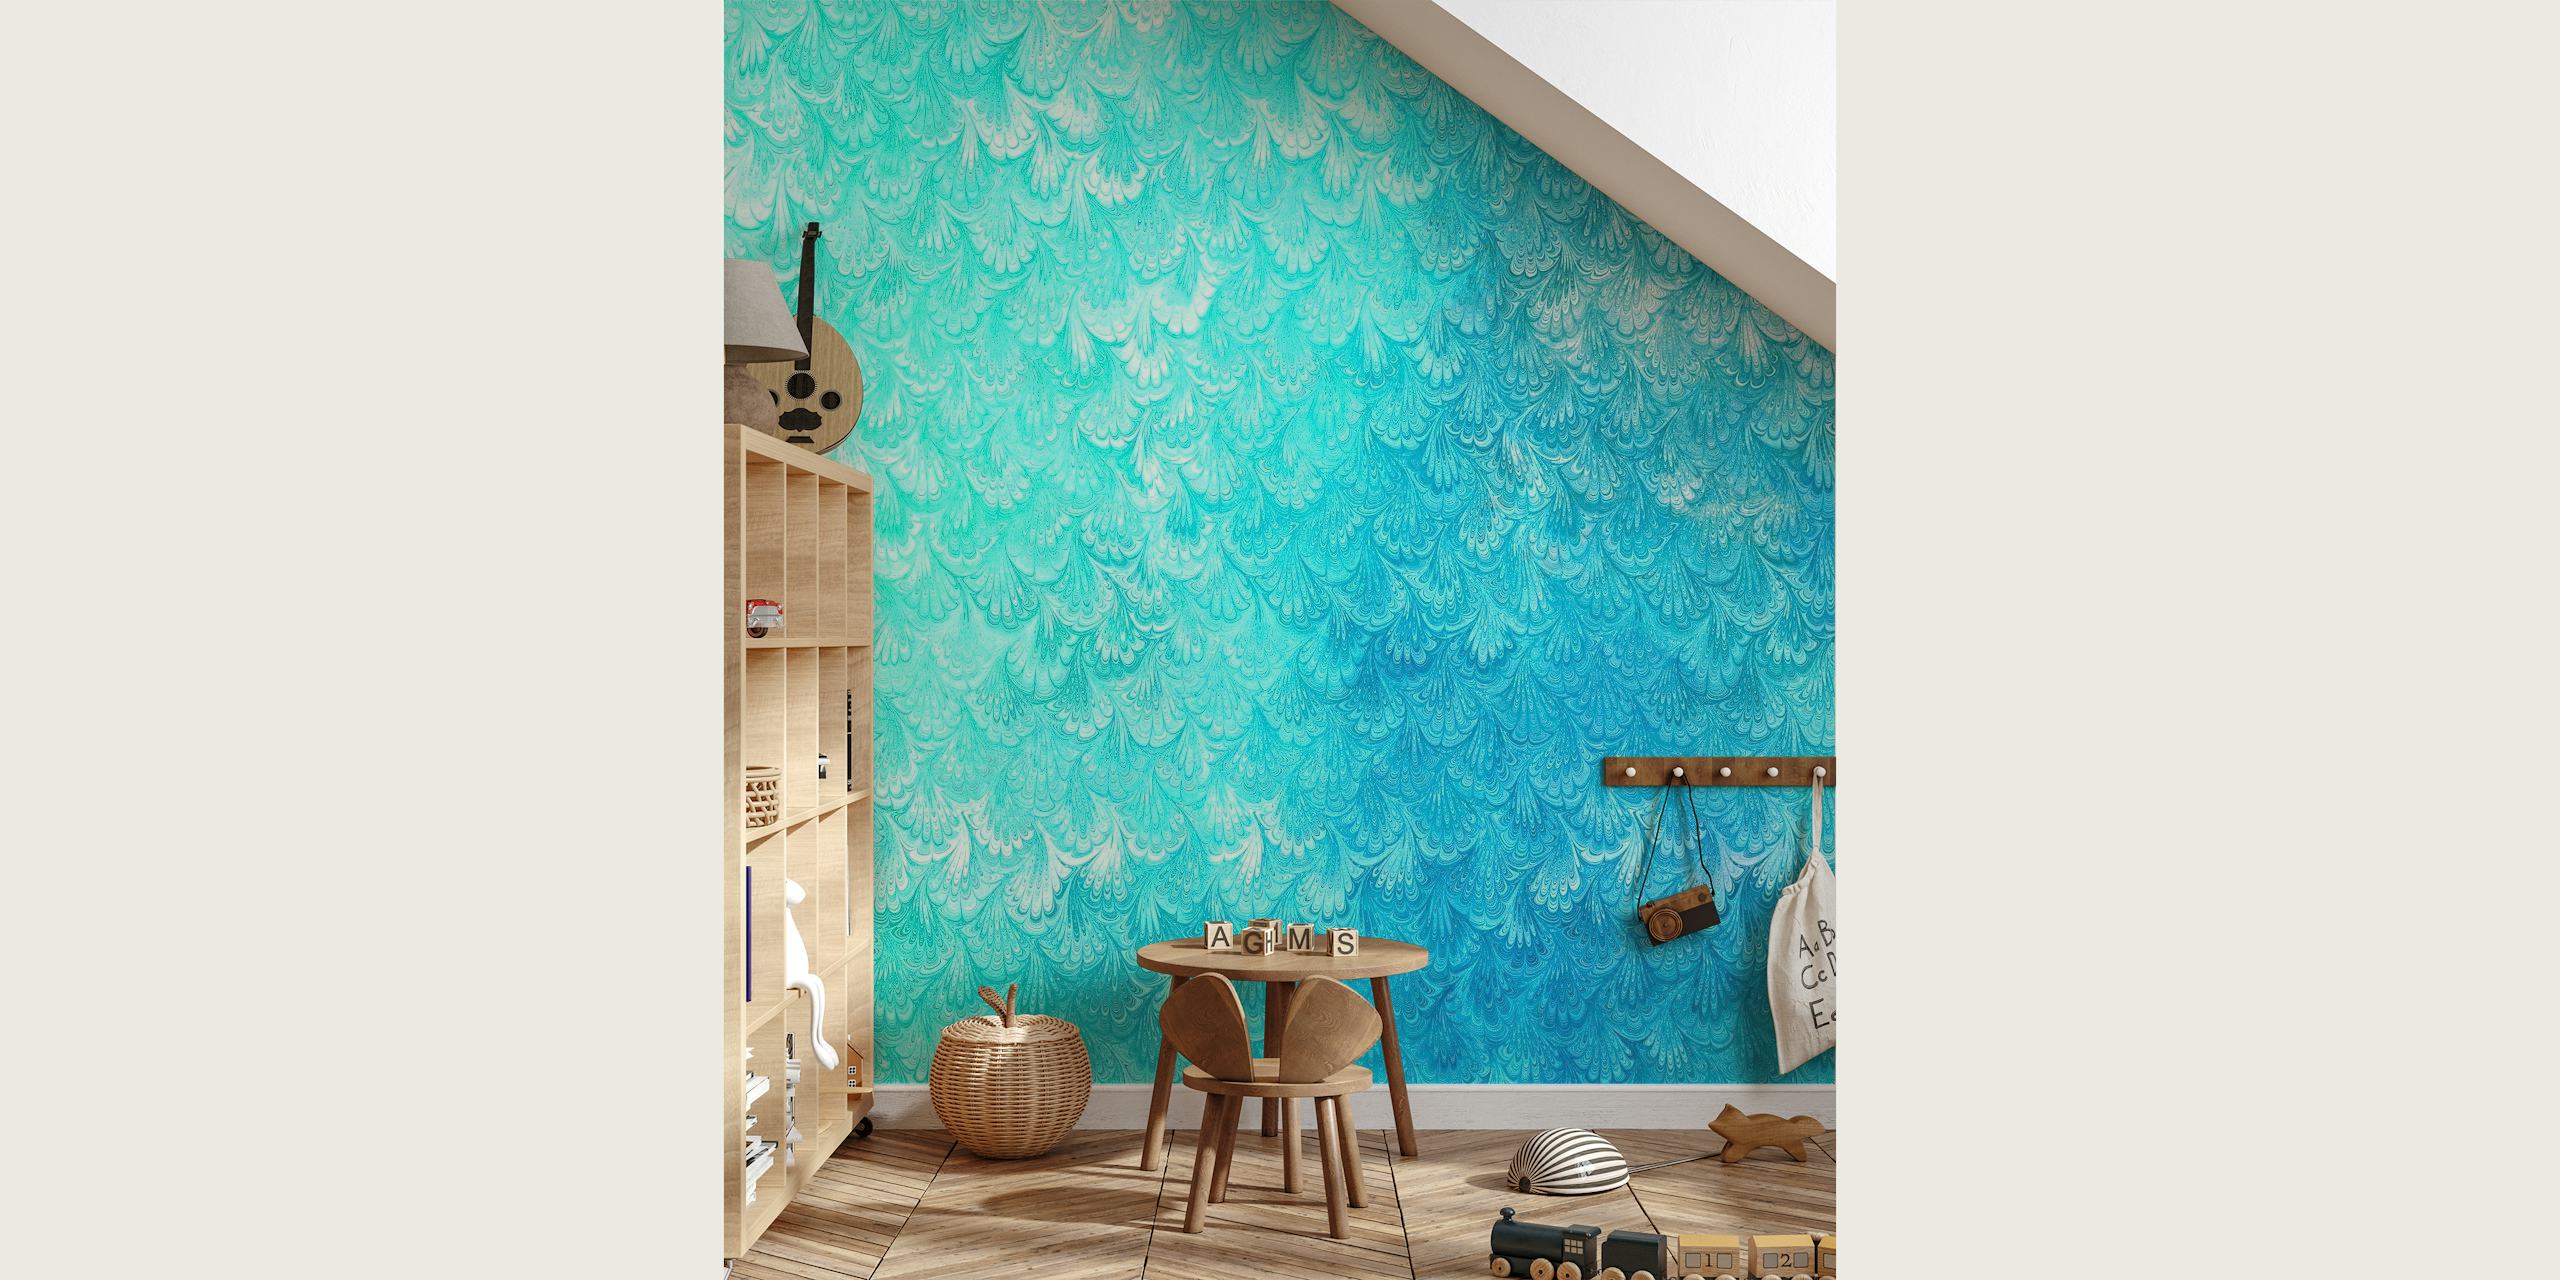 Ocean-inspired blue and teal mermaid scale pattern wall mural